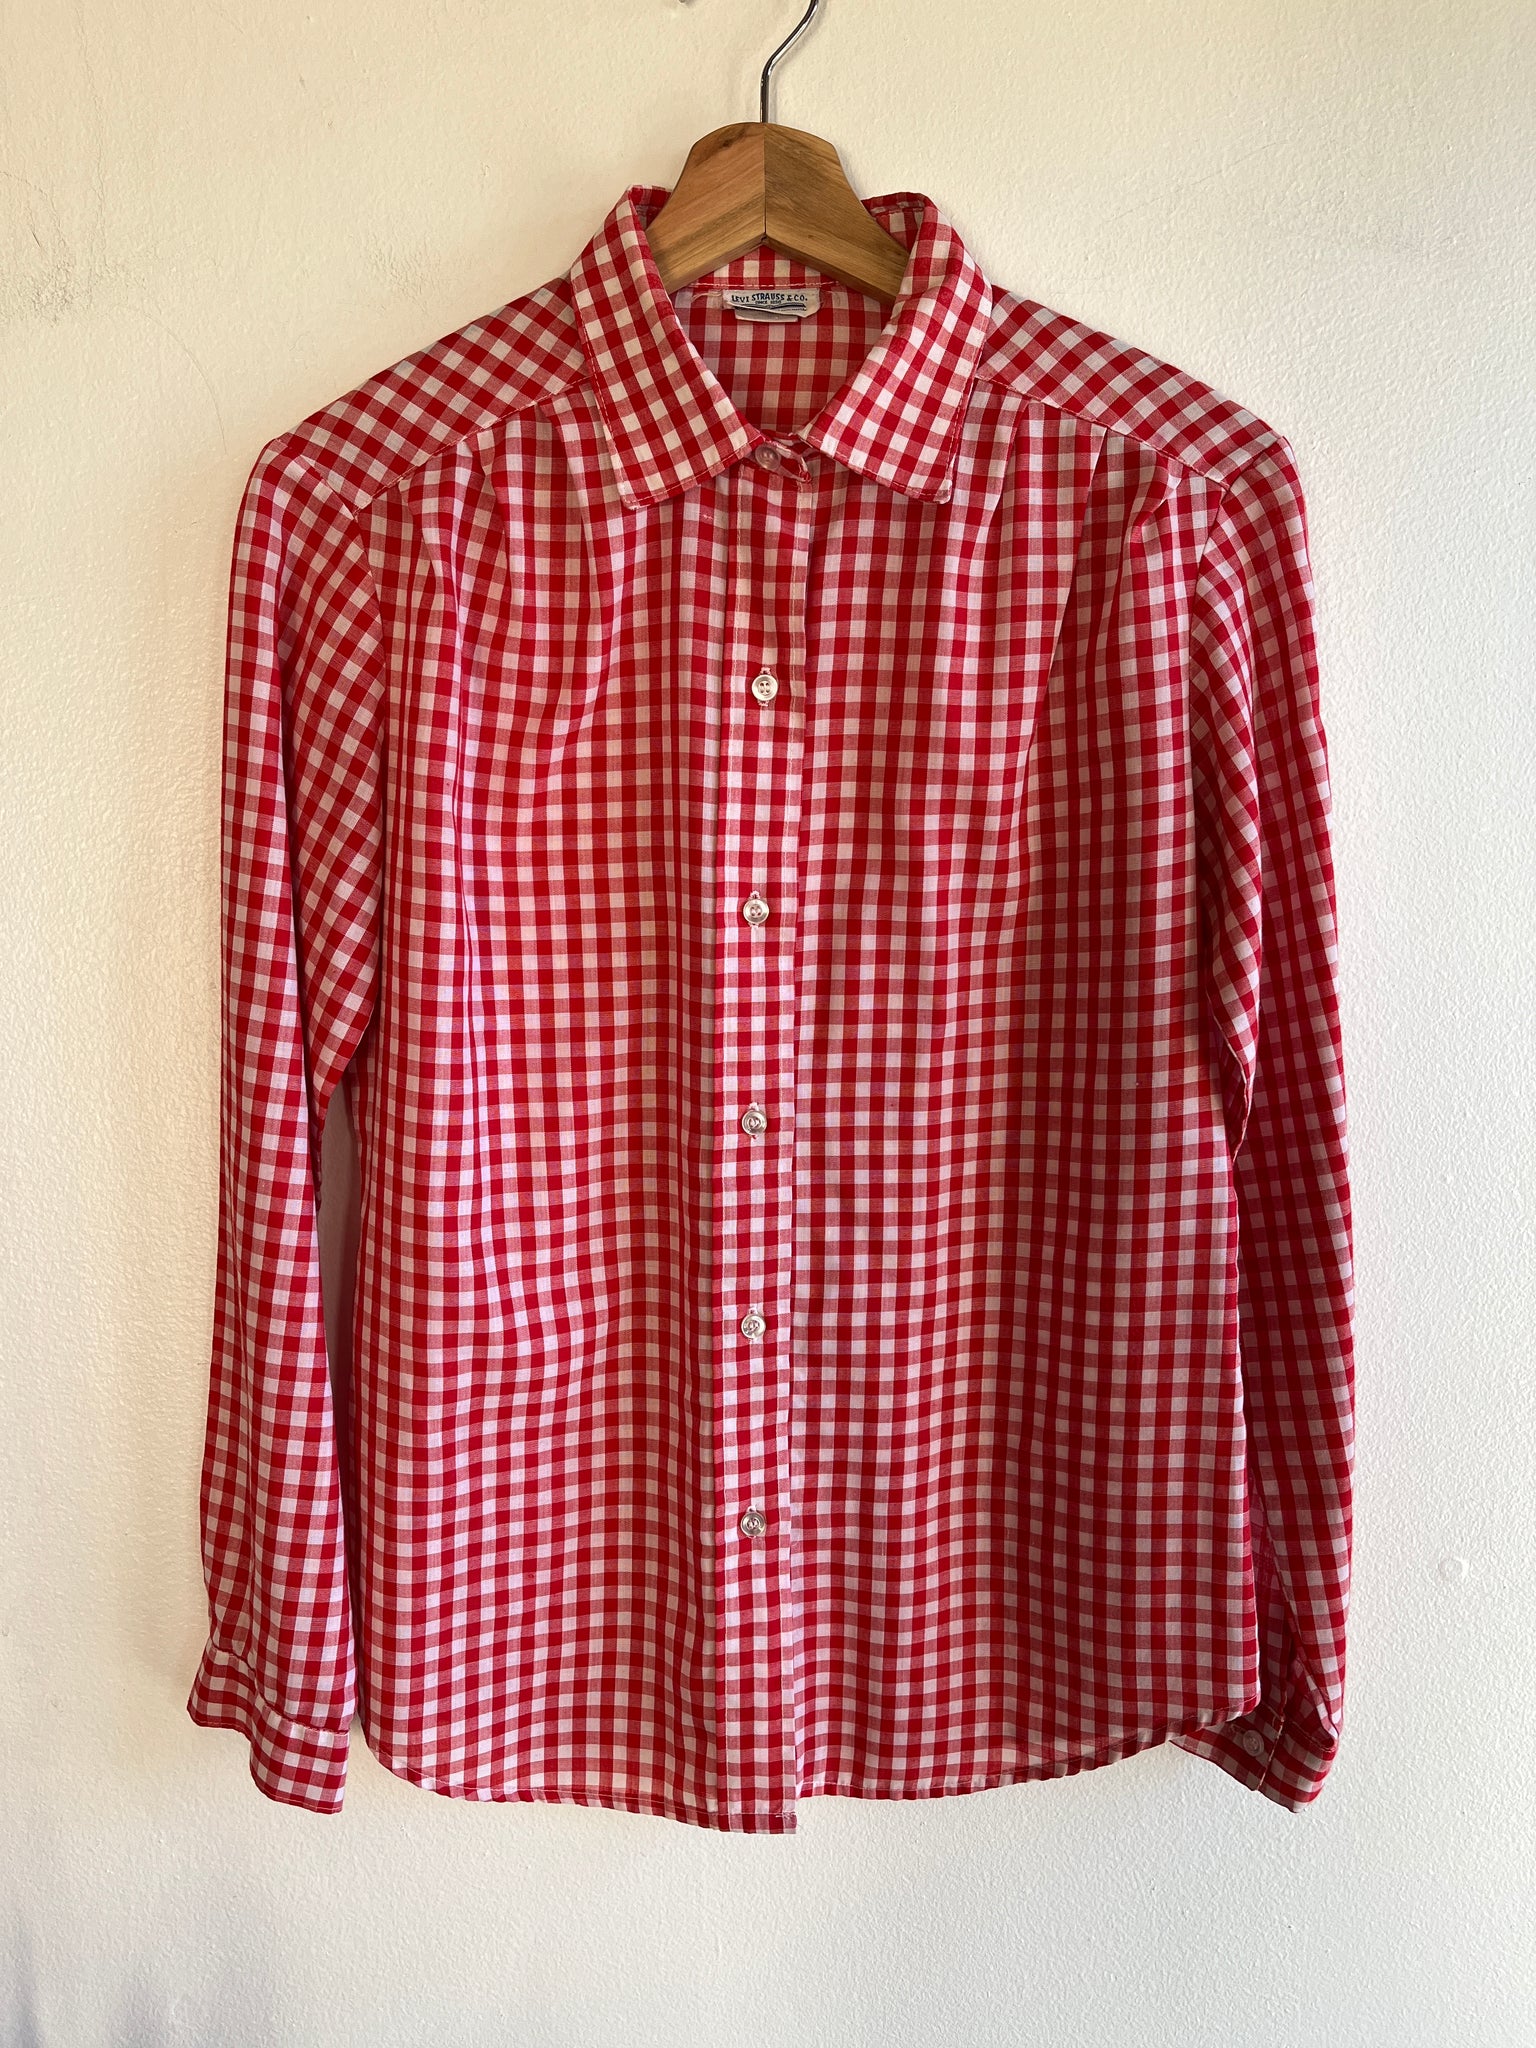 Vintage 1970’s Levi’s Gingham Button-Up Shirt